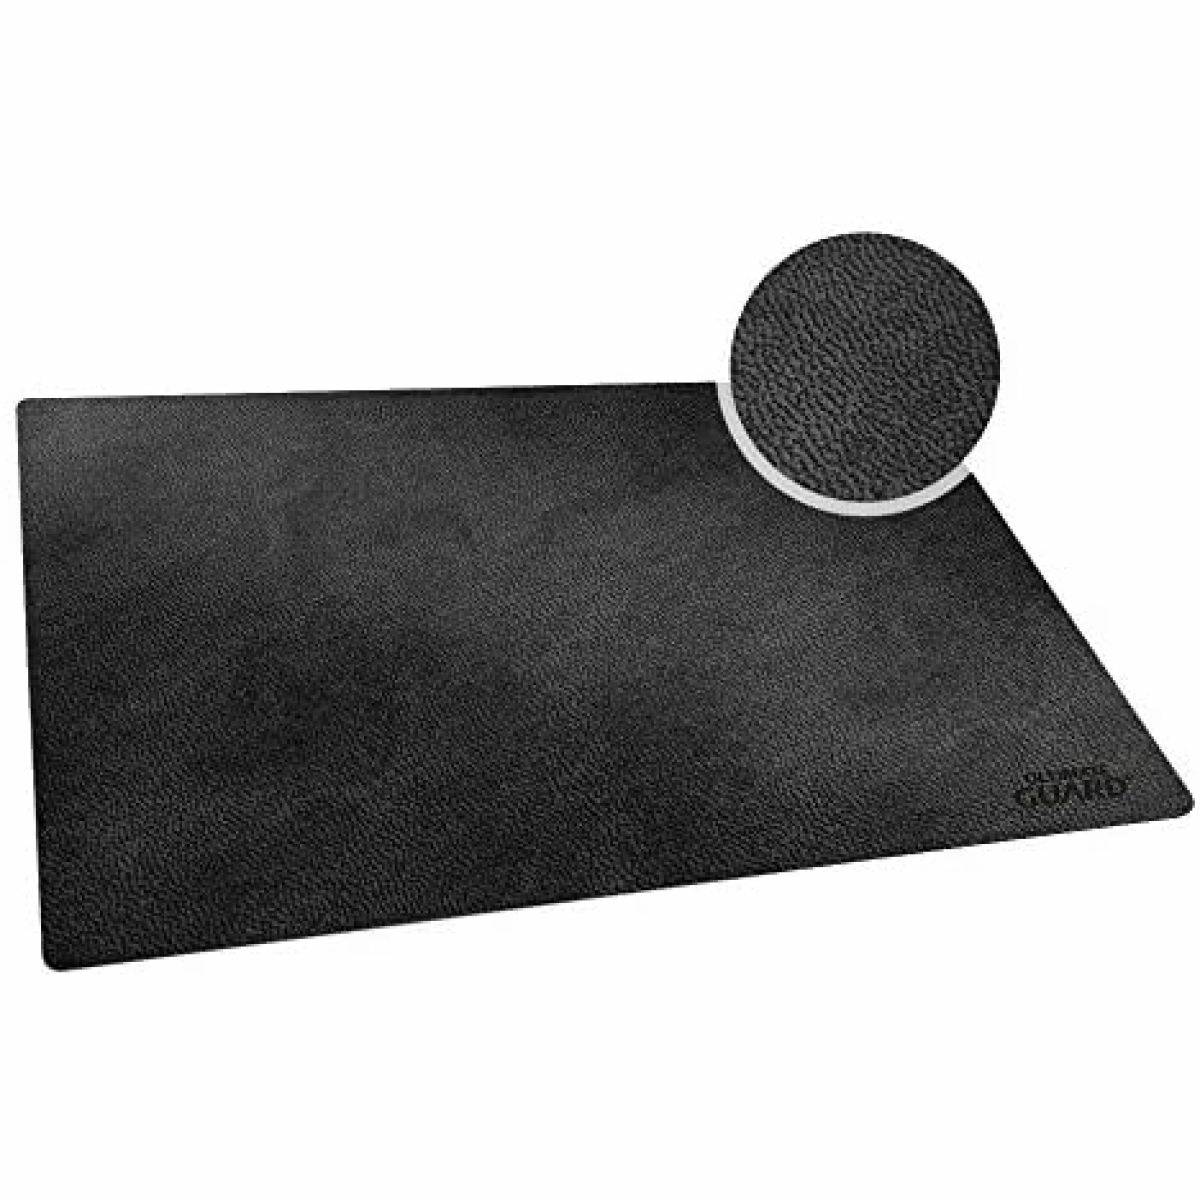 Ultimate Guard Playmat Sophoskin Black 61 X 35cm